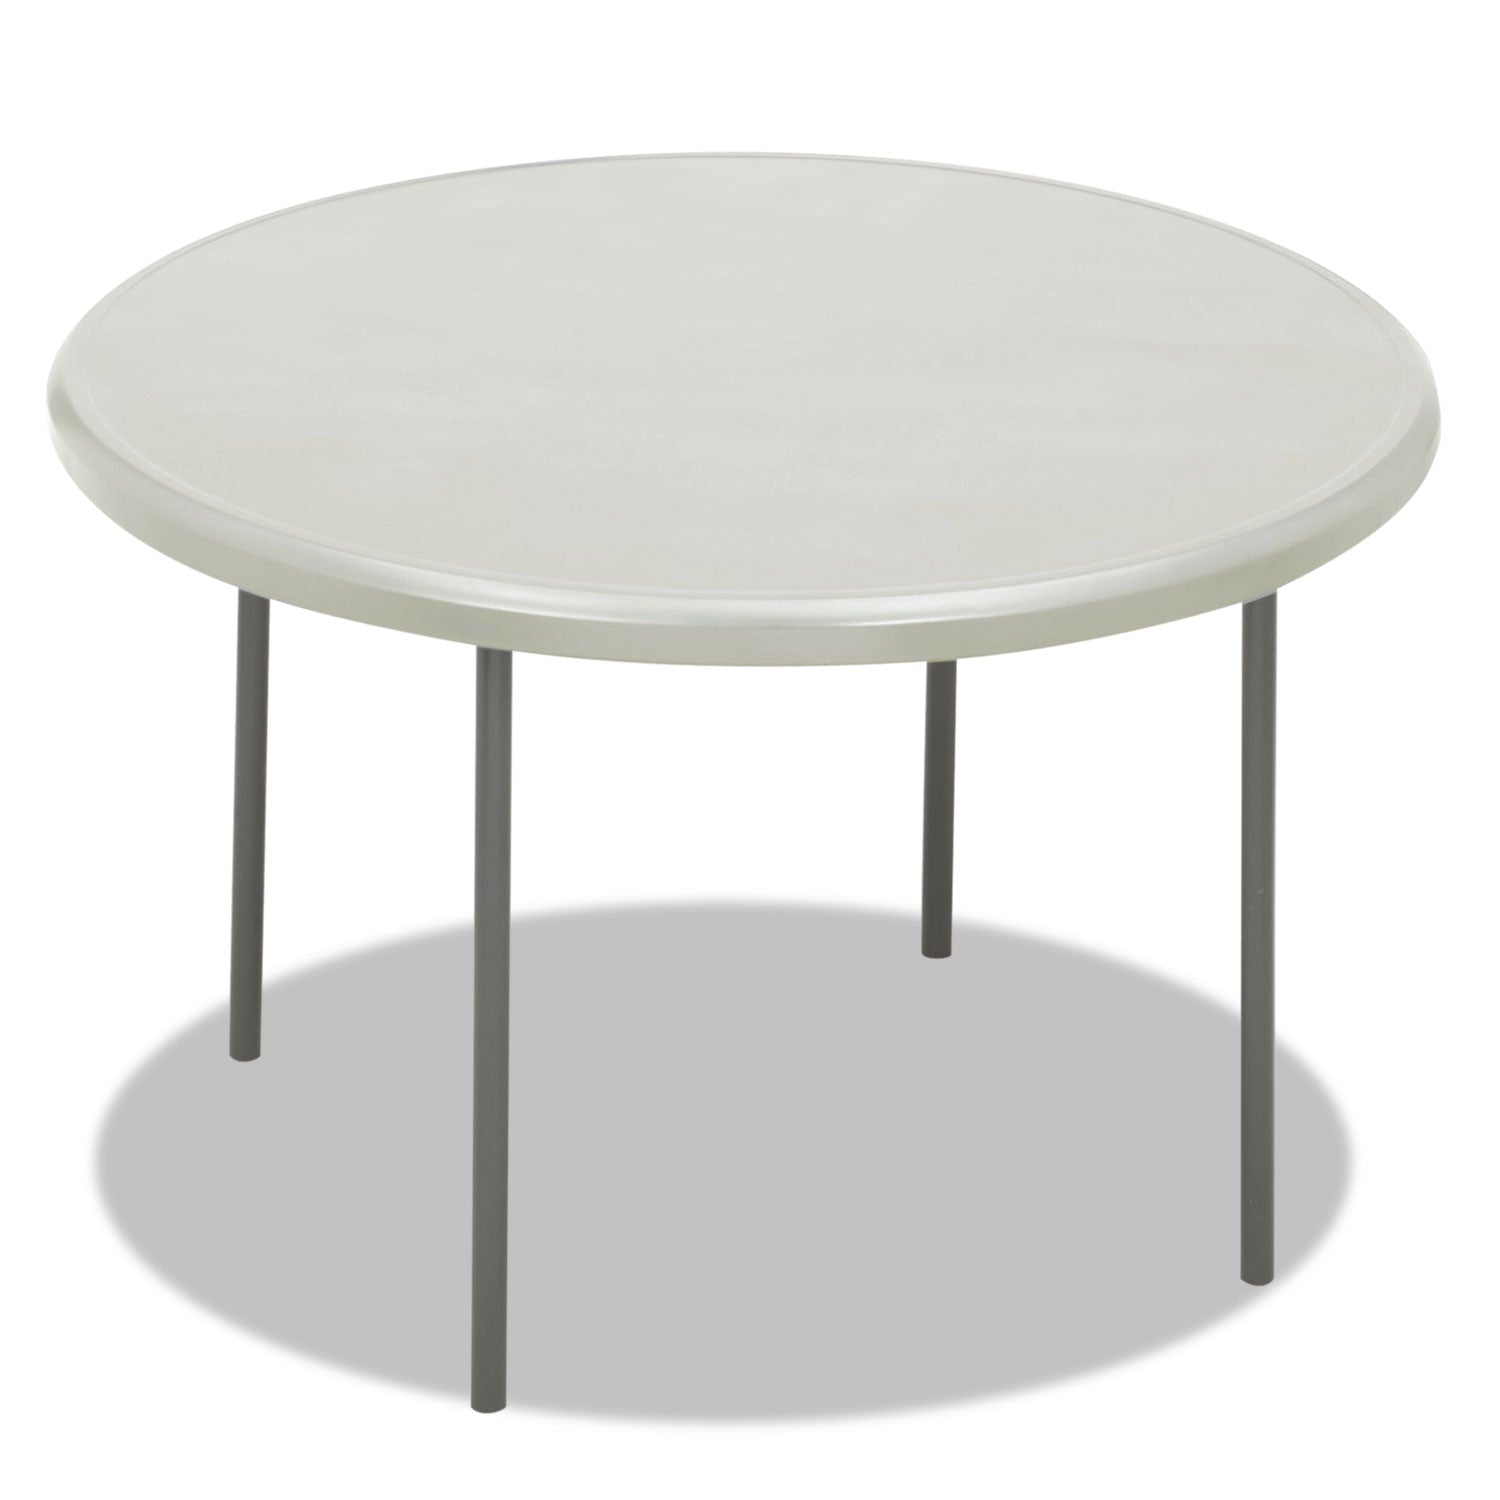 IndestrucTable Classic Folding Table, Round, 48" x 29", Platinum - 